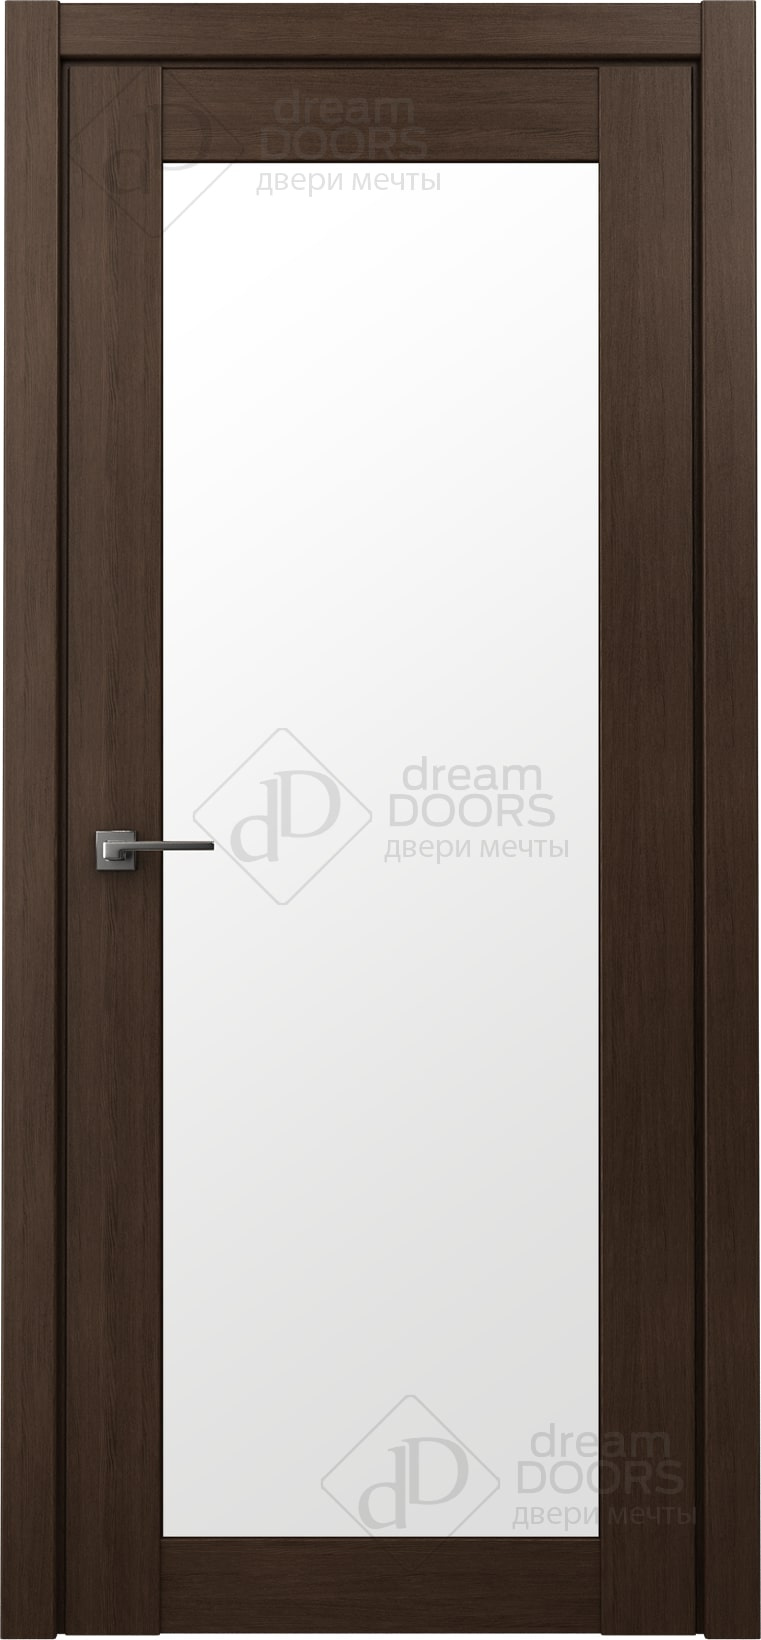 Dream Doors Межкомнатная дверь Престиж 1, арт. 16430 - фото №3